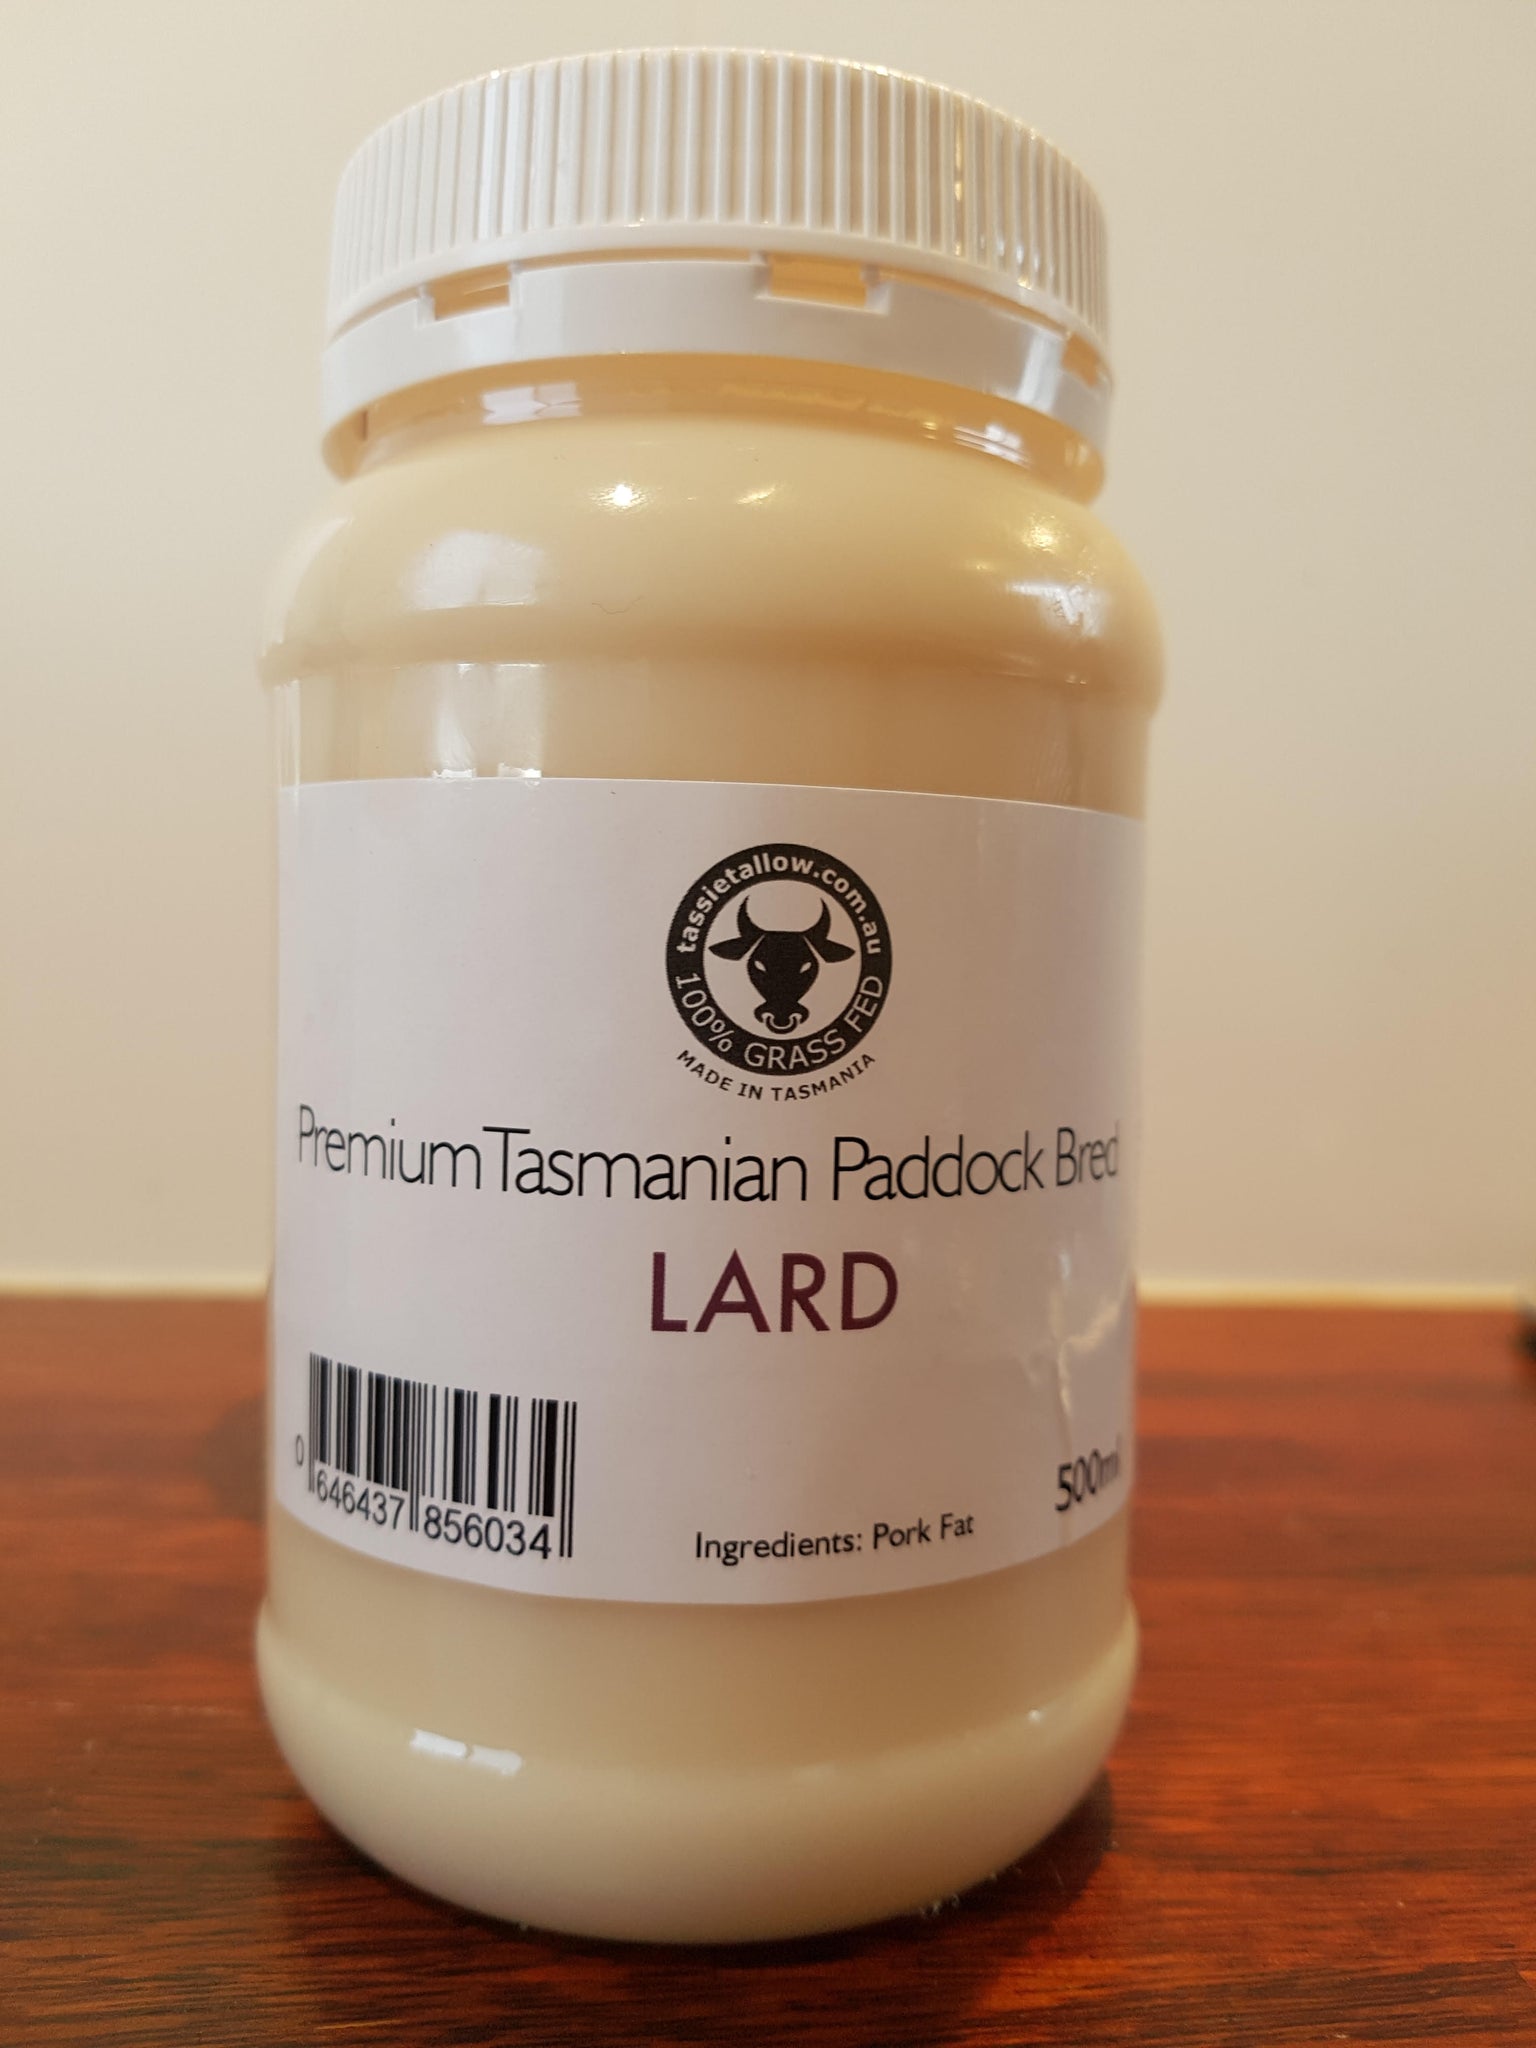 Lard - the new coconut oil?